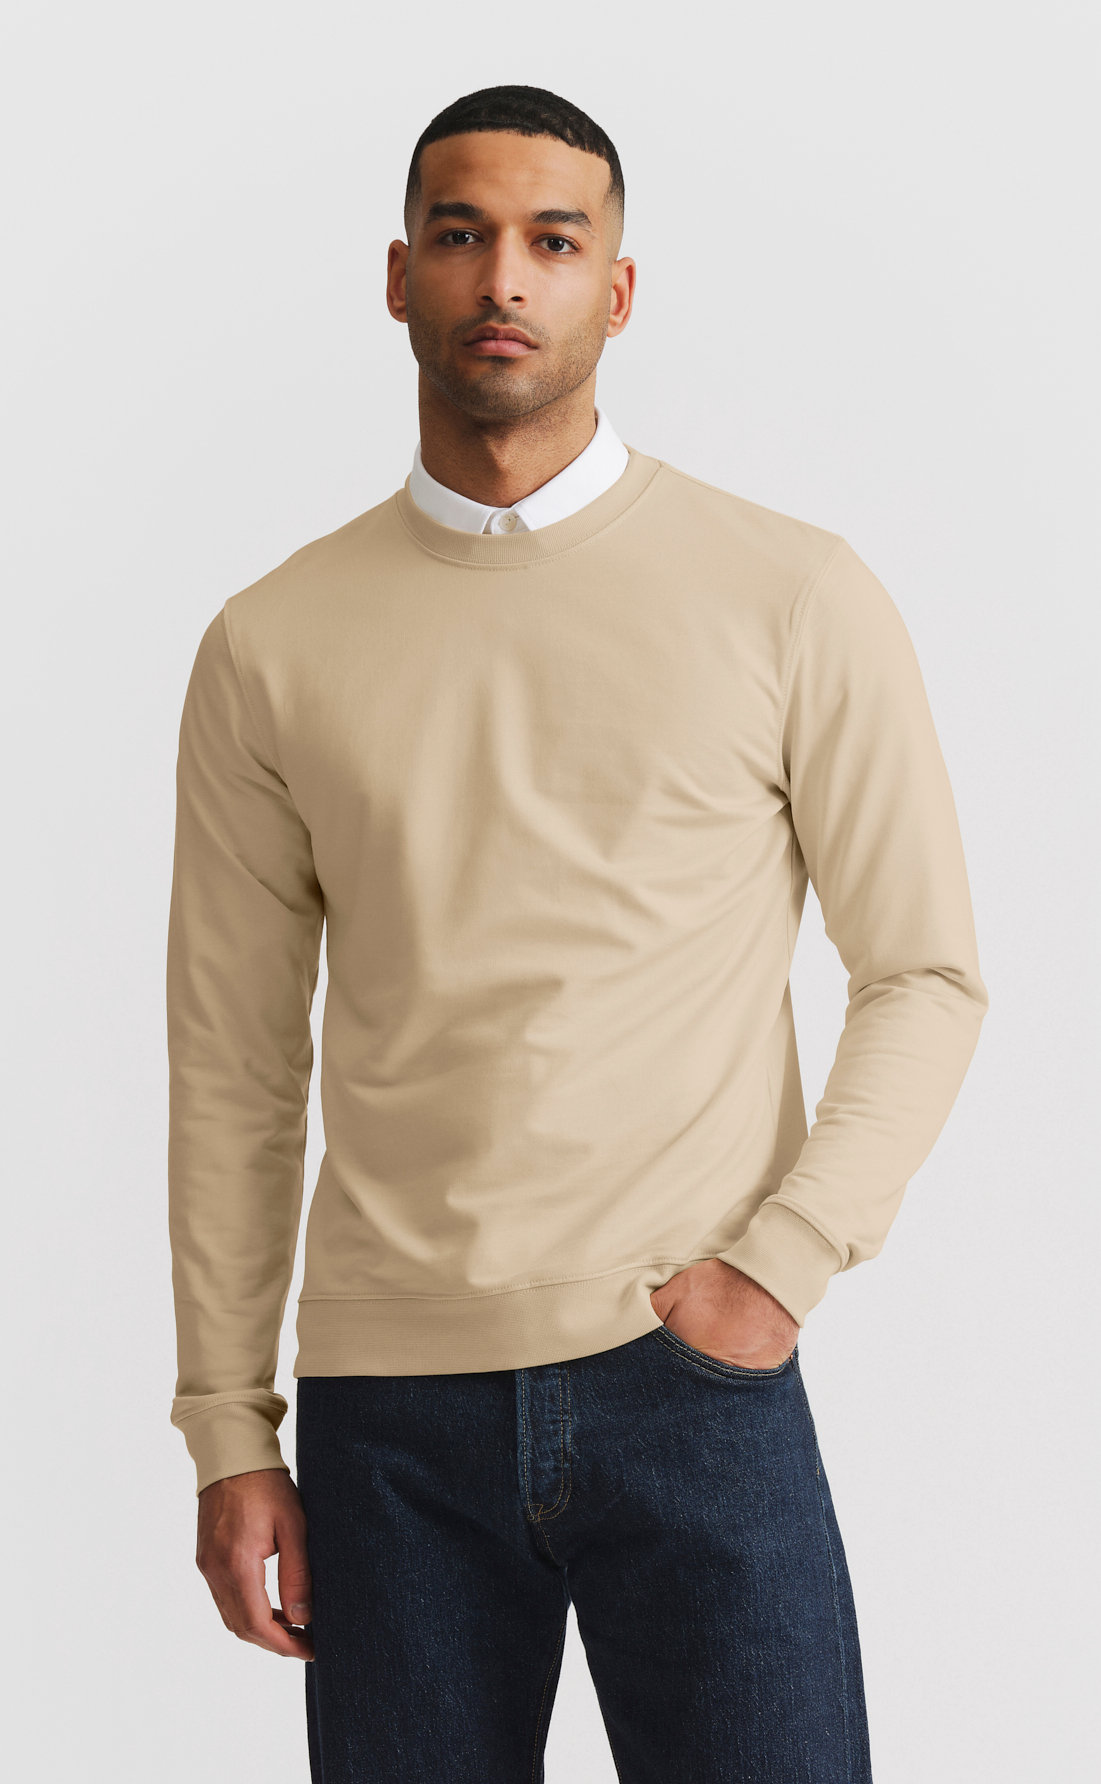 Custom Fitted Cotton Sweatshirt